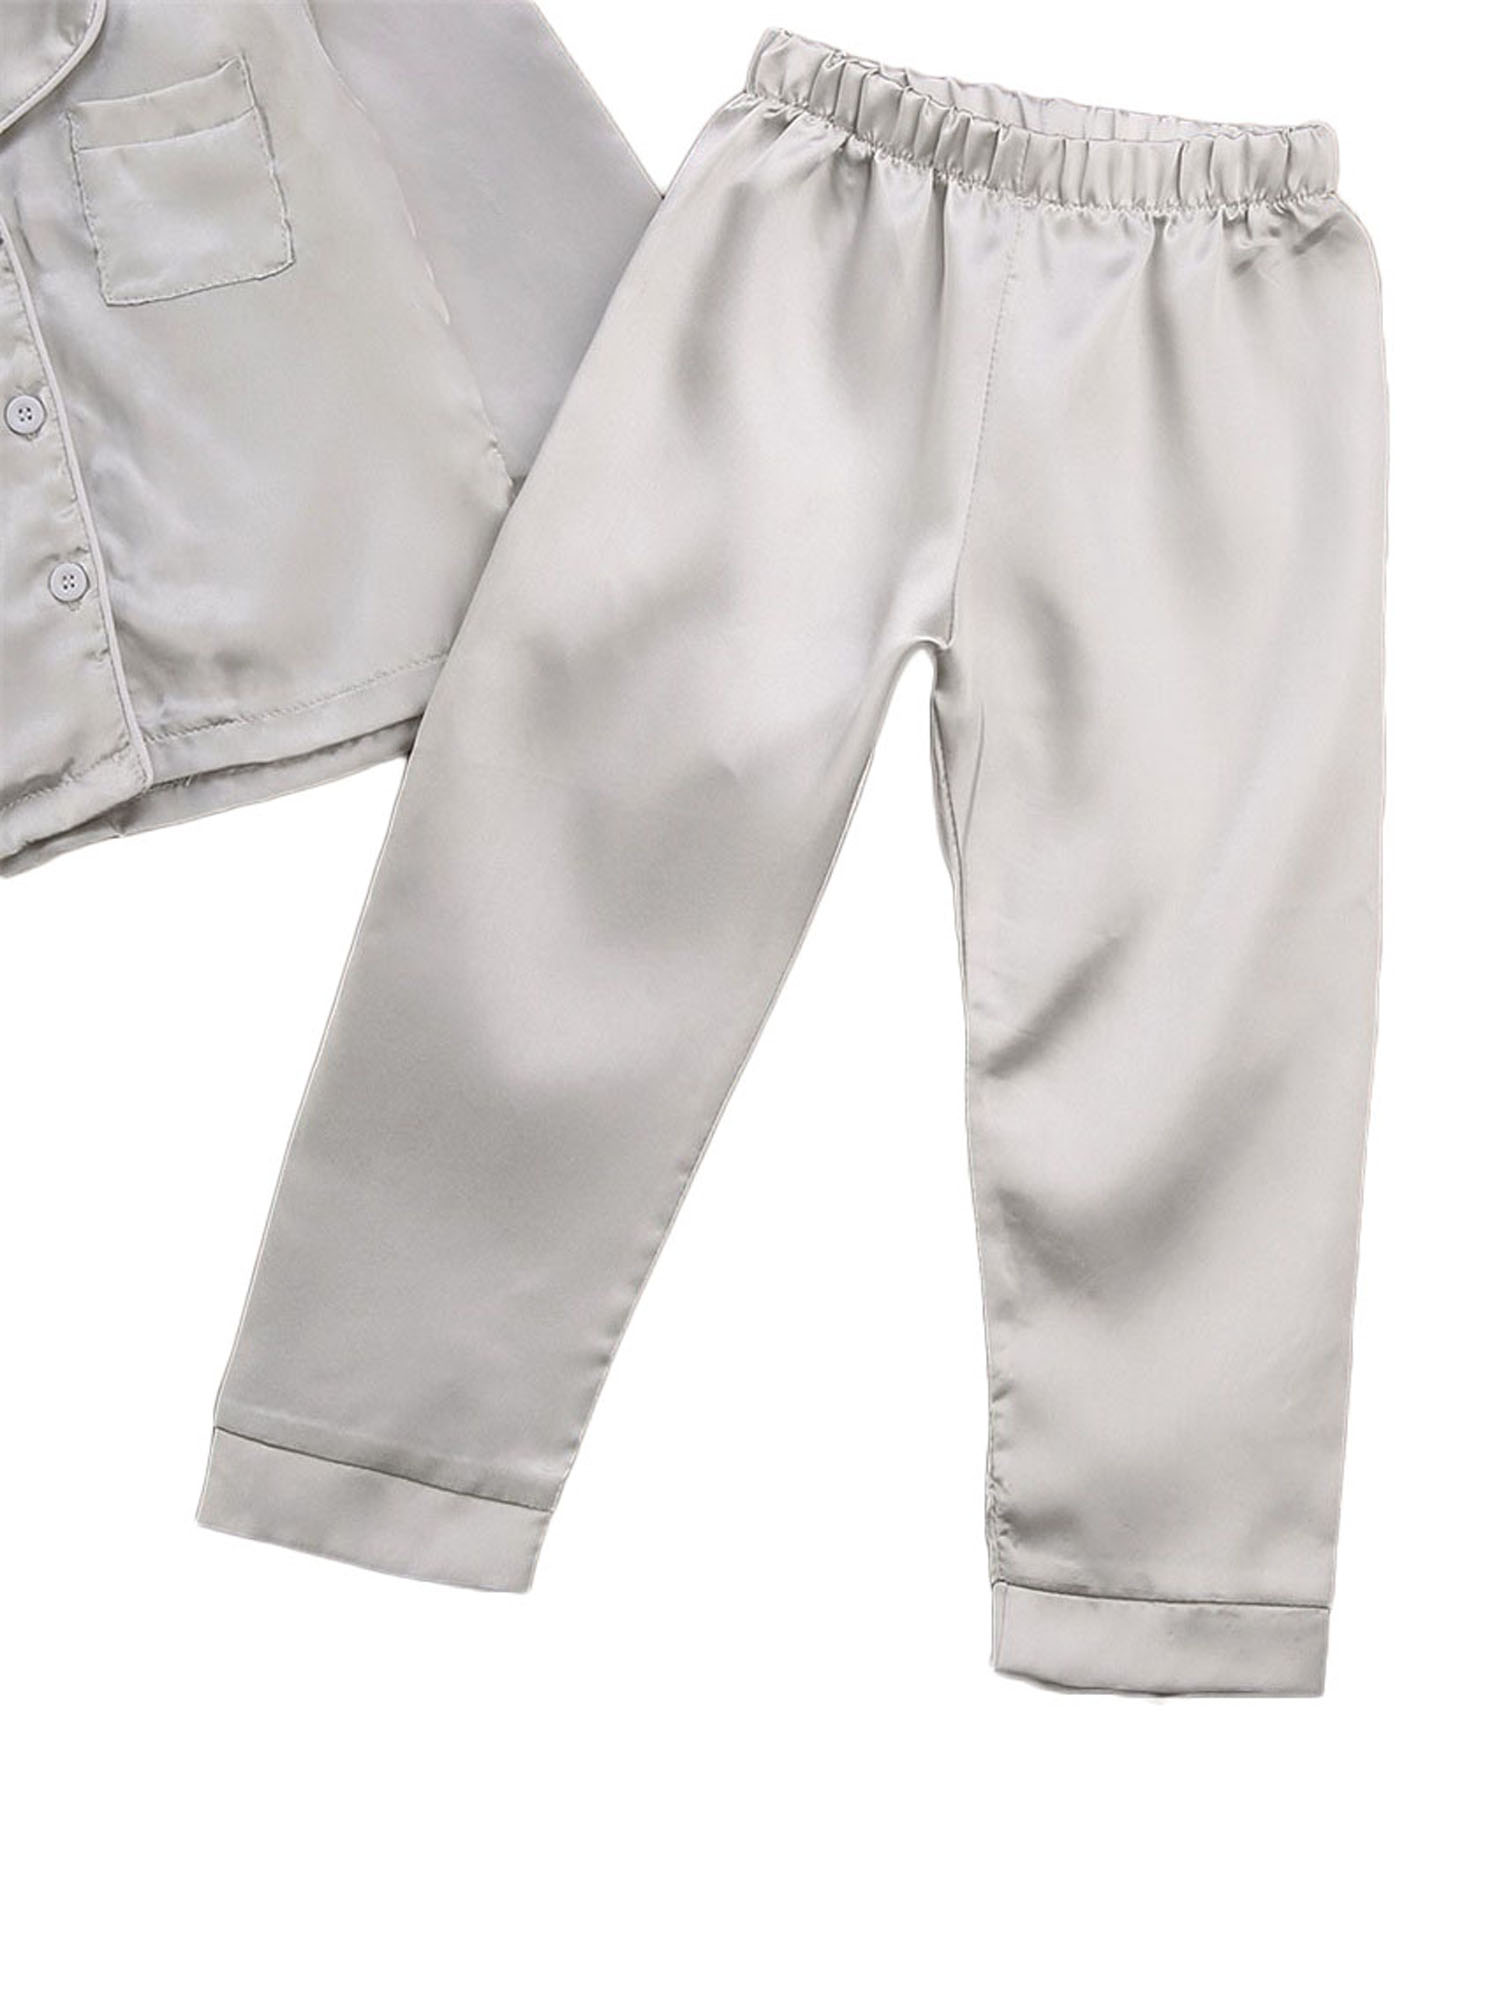 Dewadbow Childrens Kids Pyjamas Silk Satin Top Pant Nightwear Girls Boys Pjs Stock - image 5 of 5